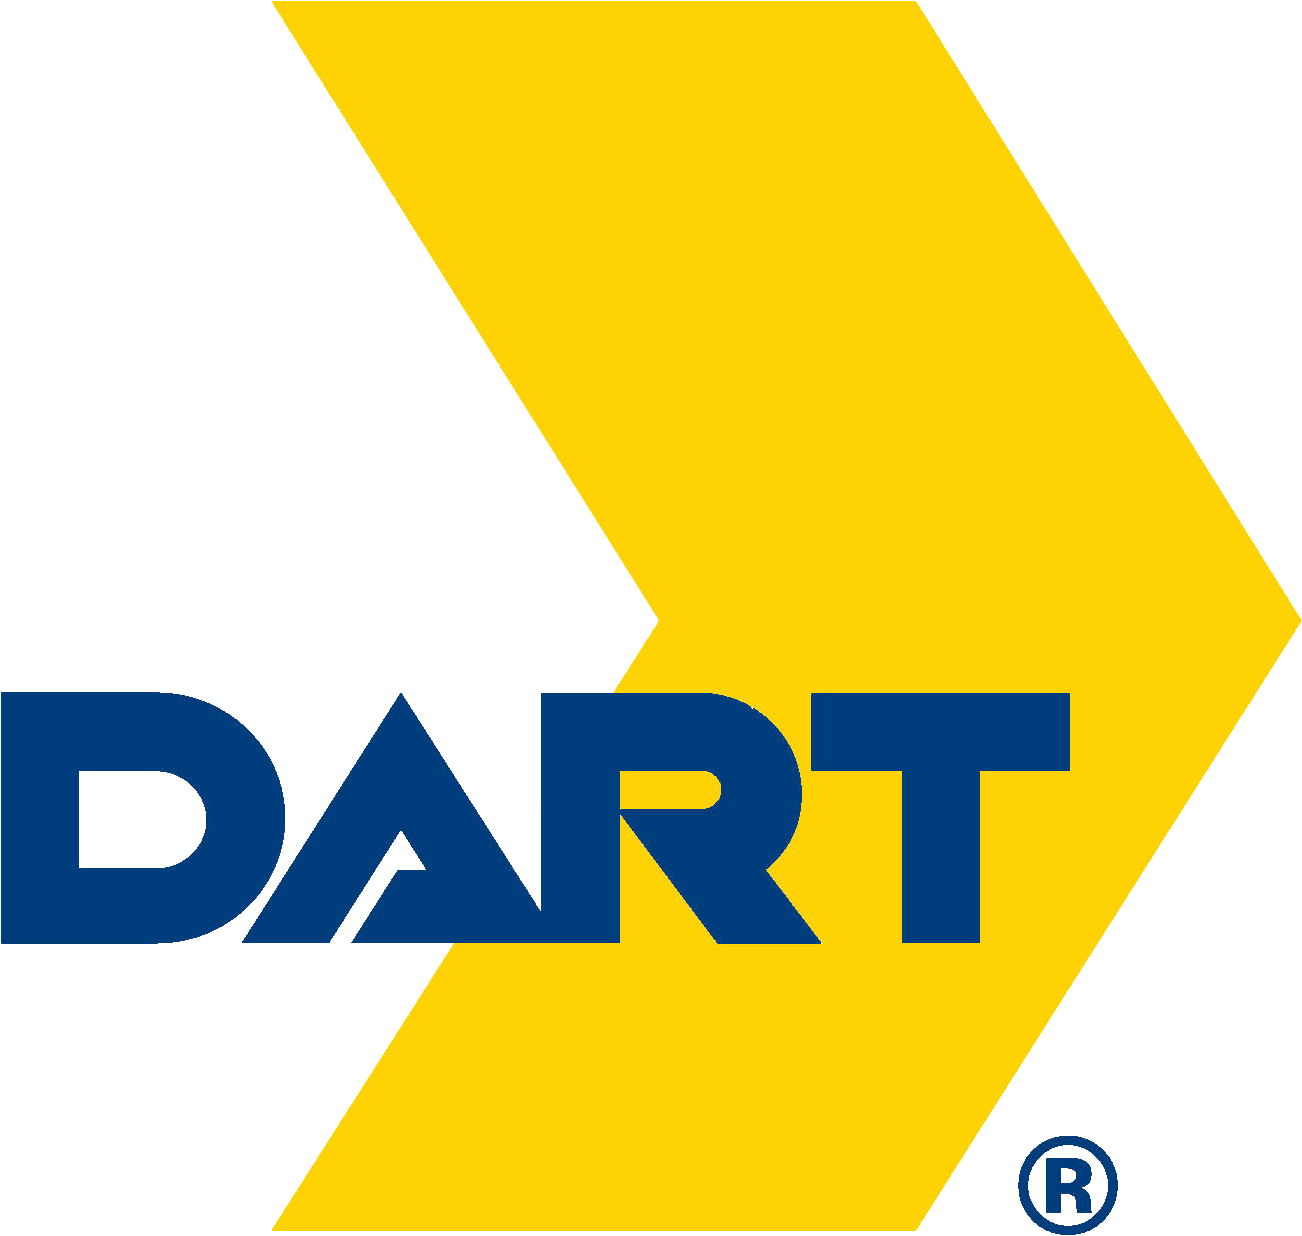 Dart Logo With R